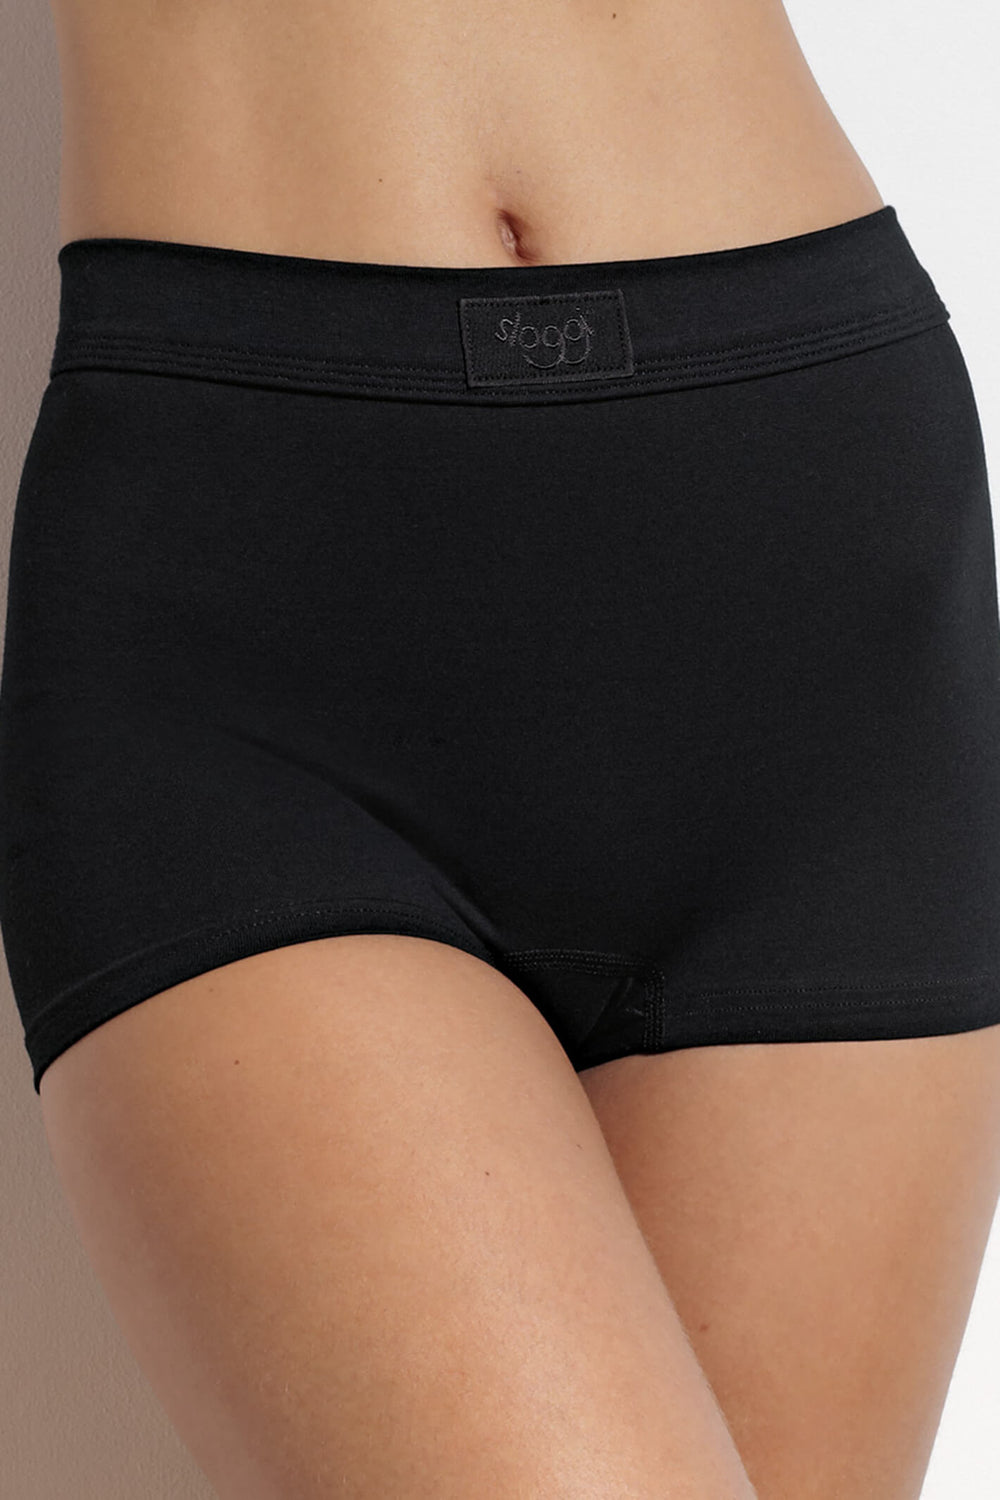 Sloggi 10022496 0004 Black Double Comfort Cotton Shorts - Shirley Allum Boutique